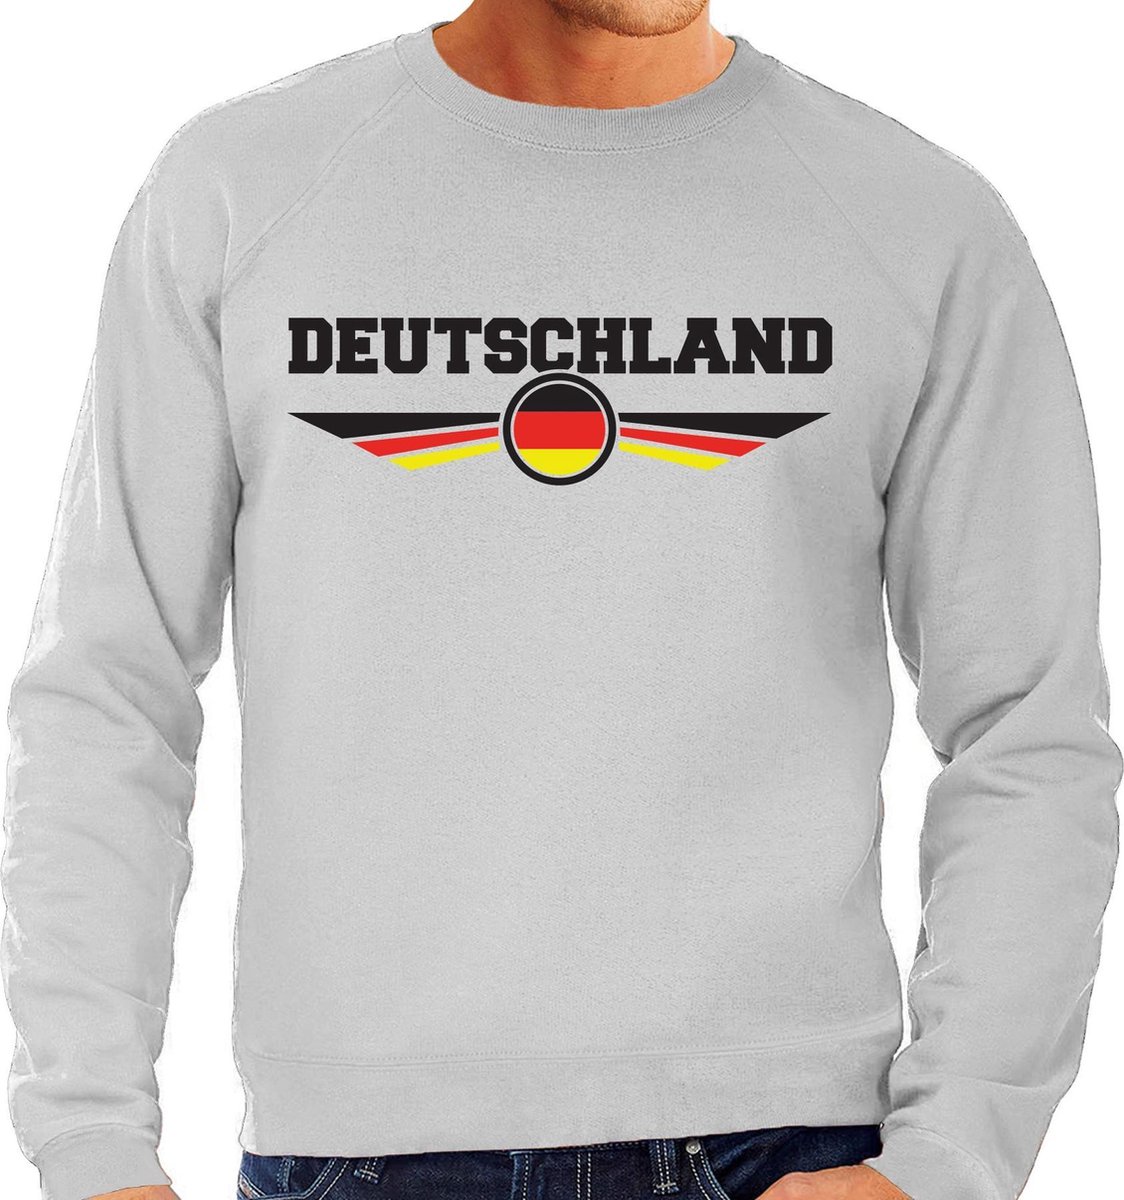 Duitsland / Deutschland landen sweater / trui grijs heren XL